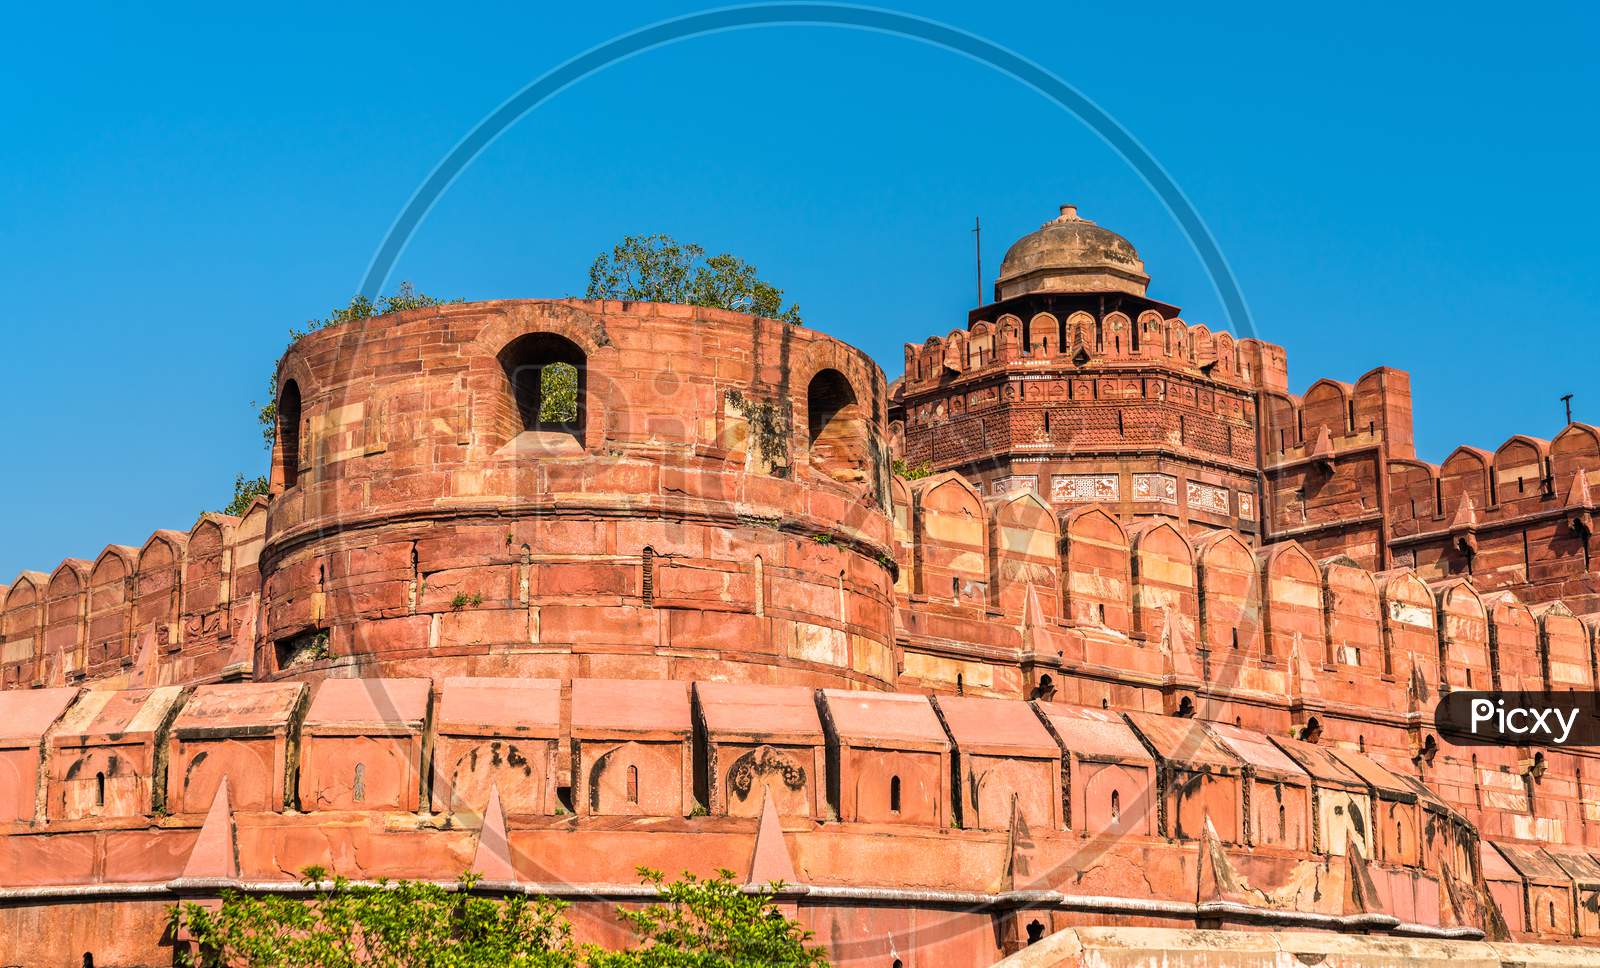 Delhi Gate Of Agra Fort. Unesco Heritage Site In India